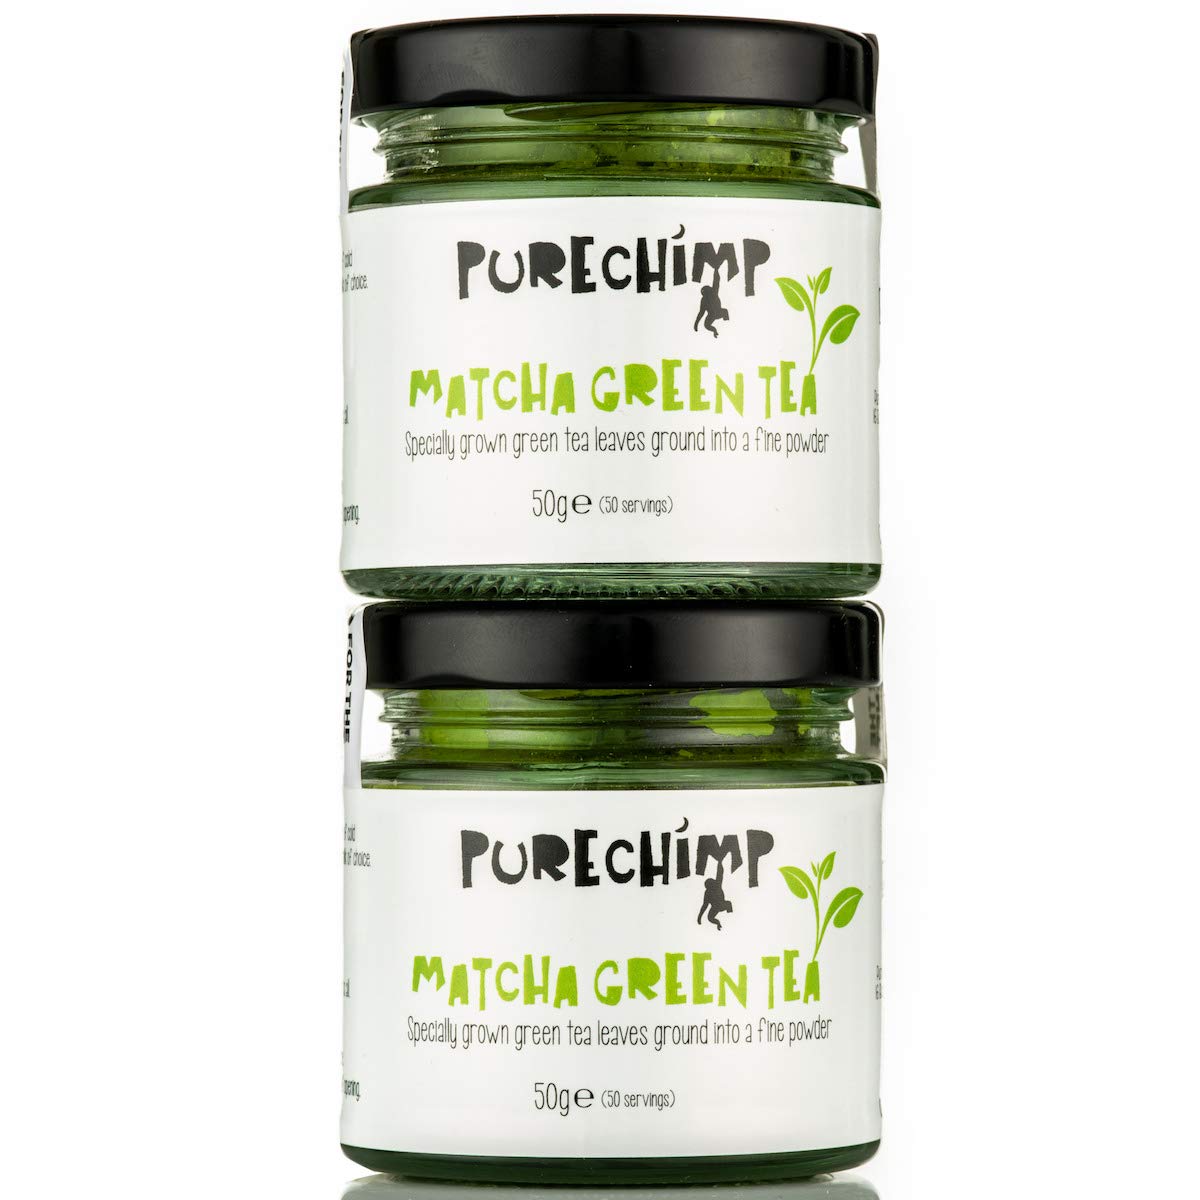 PureChimp Matcha Green Tea Powder | Regular/Lemon/Mint/Turmeric 50g Jars [Packs of 2] | Ceremonial Grade from Japan | All Natural & Vegan | Pesticide-Free (2 x Regular )